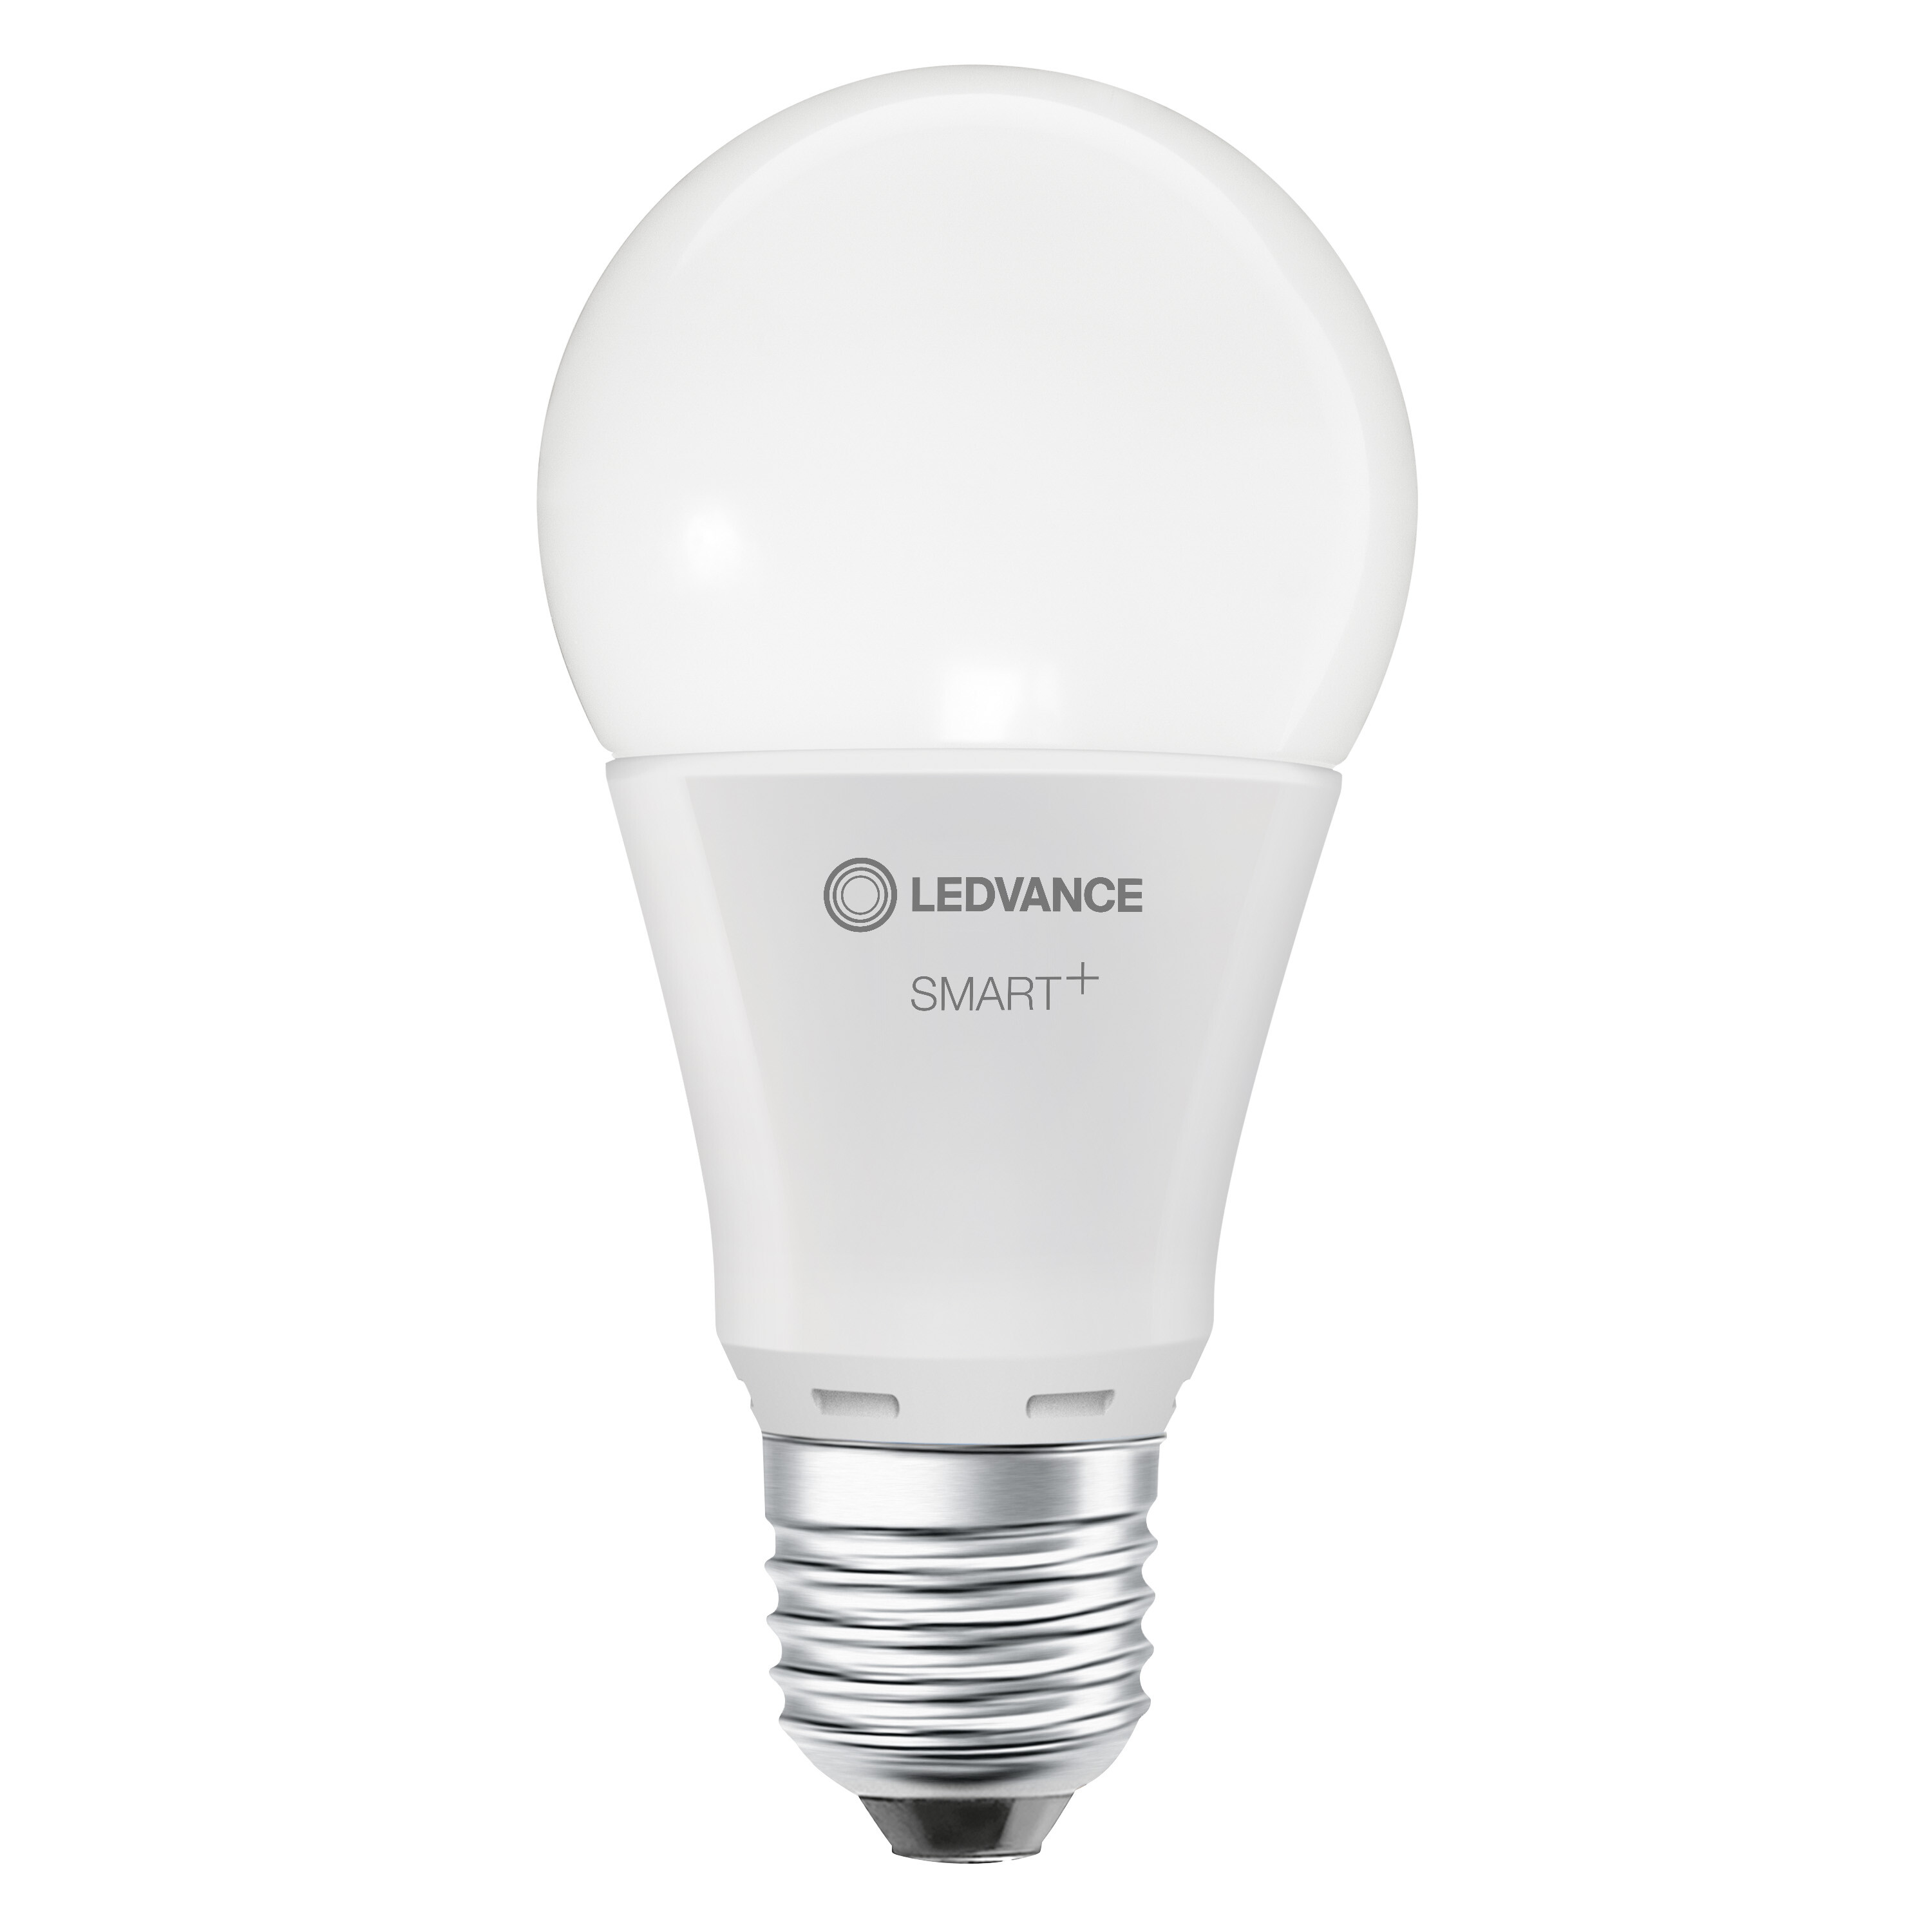 Lichtfarbe Tunable änderbar White Classic Lampe WiFi LED LEDVANCE SMART+